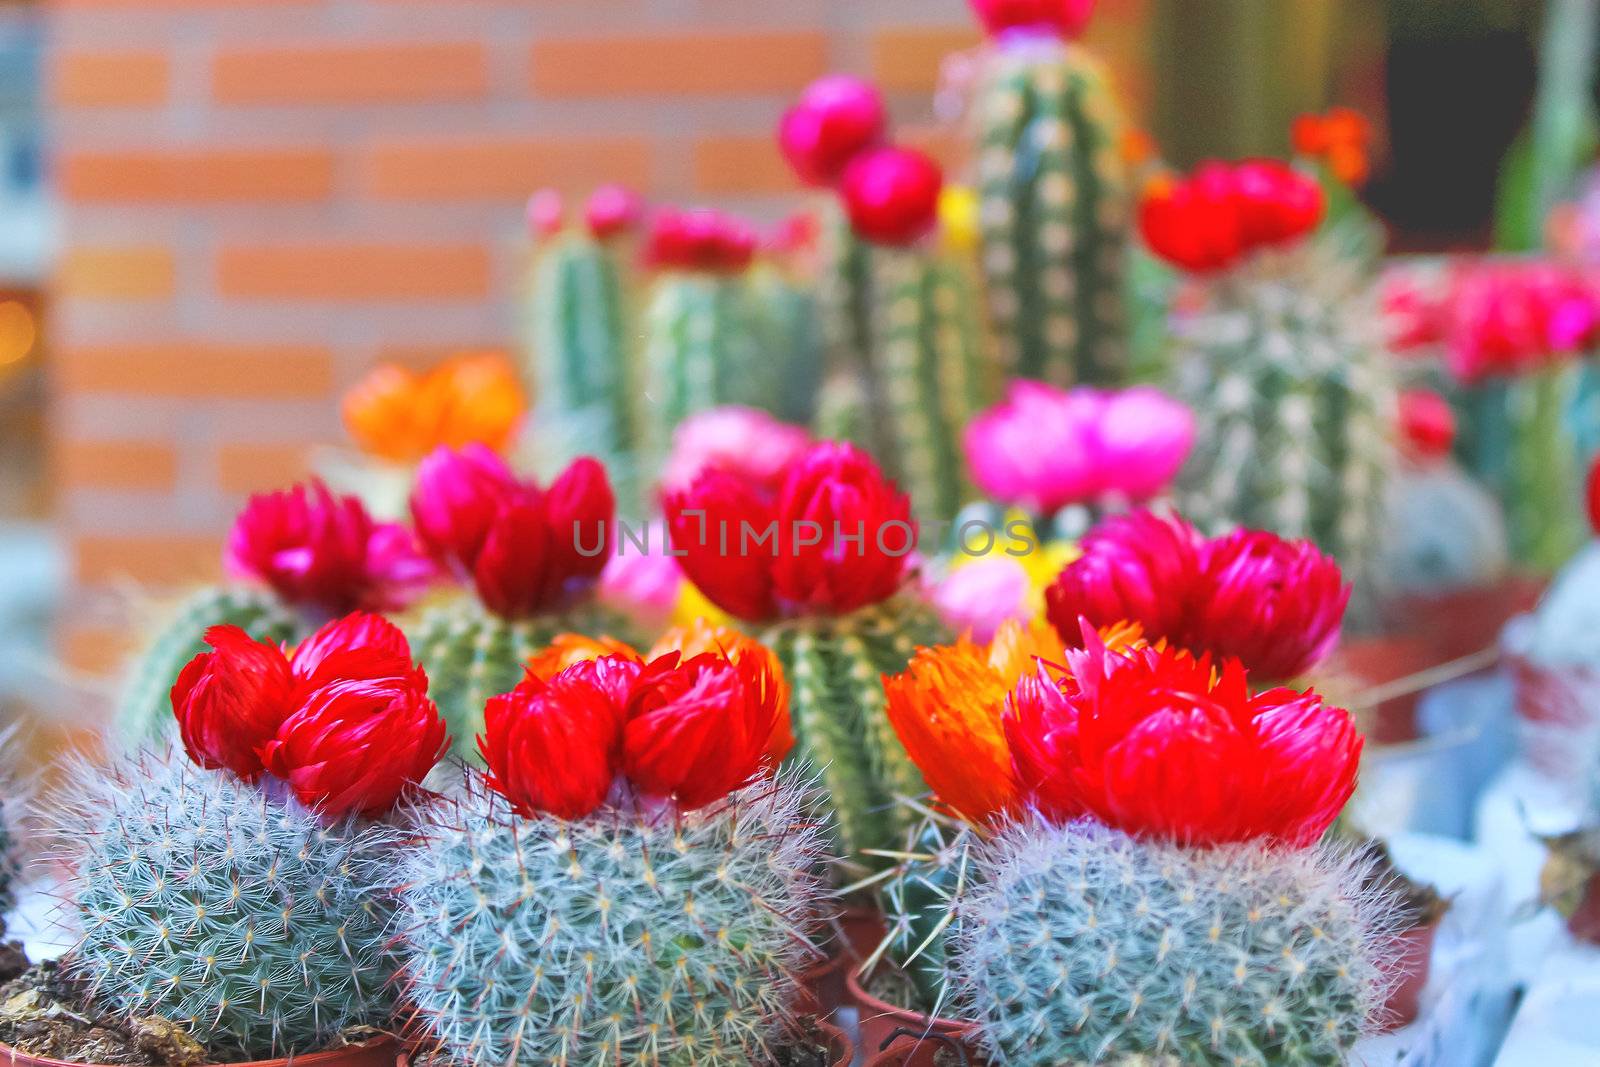 Flowering cacti in pots in a shop window by NickNick